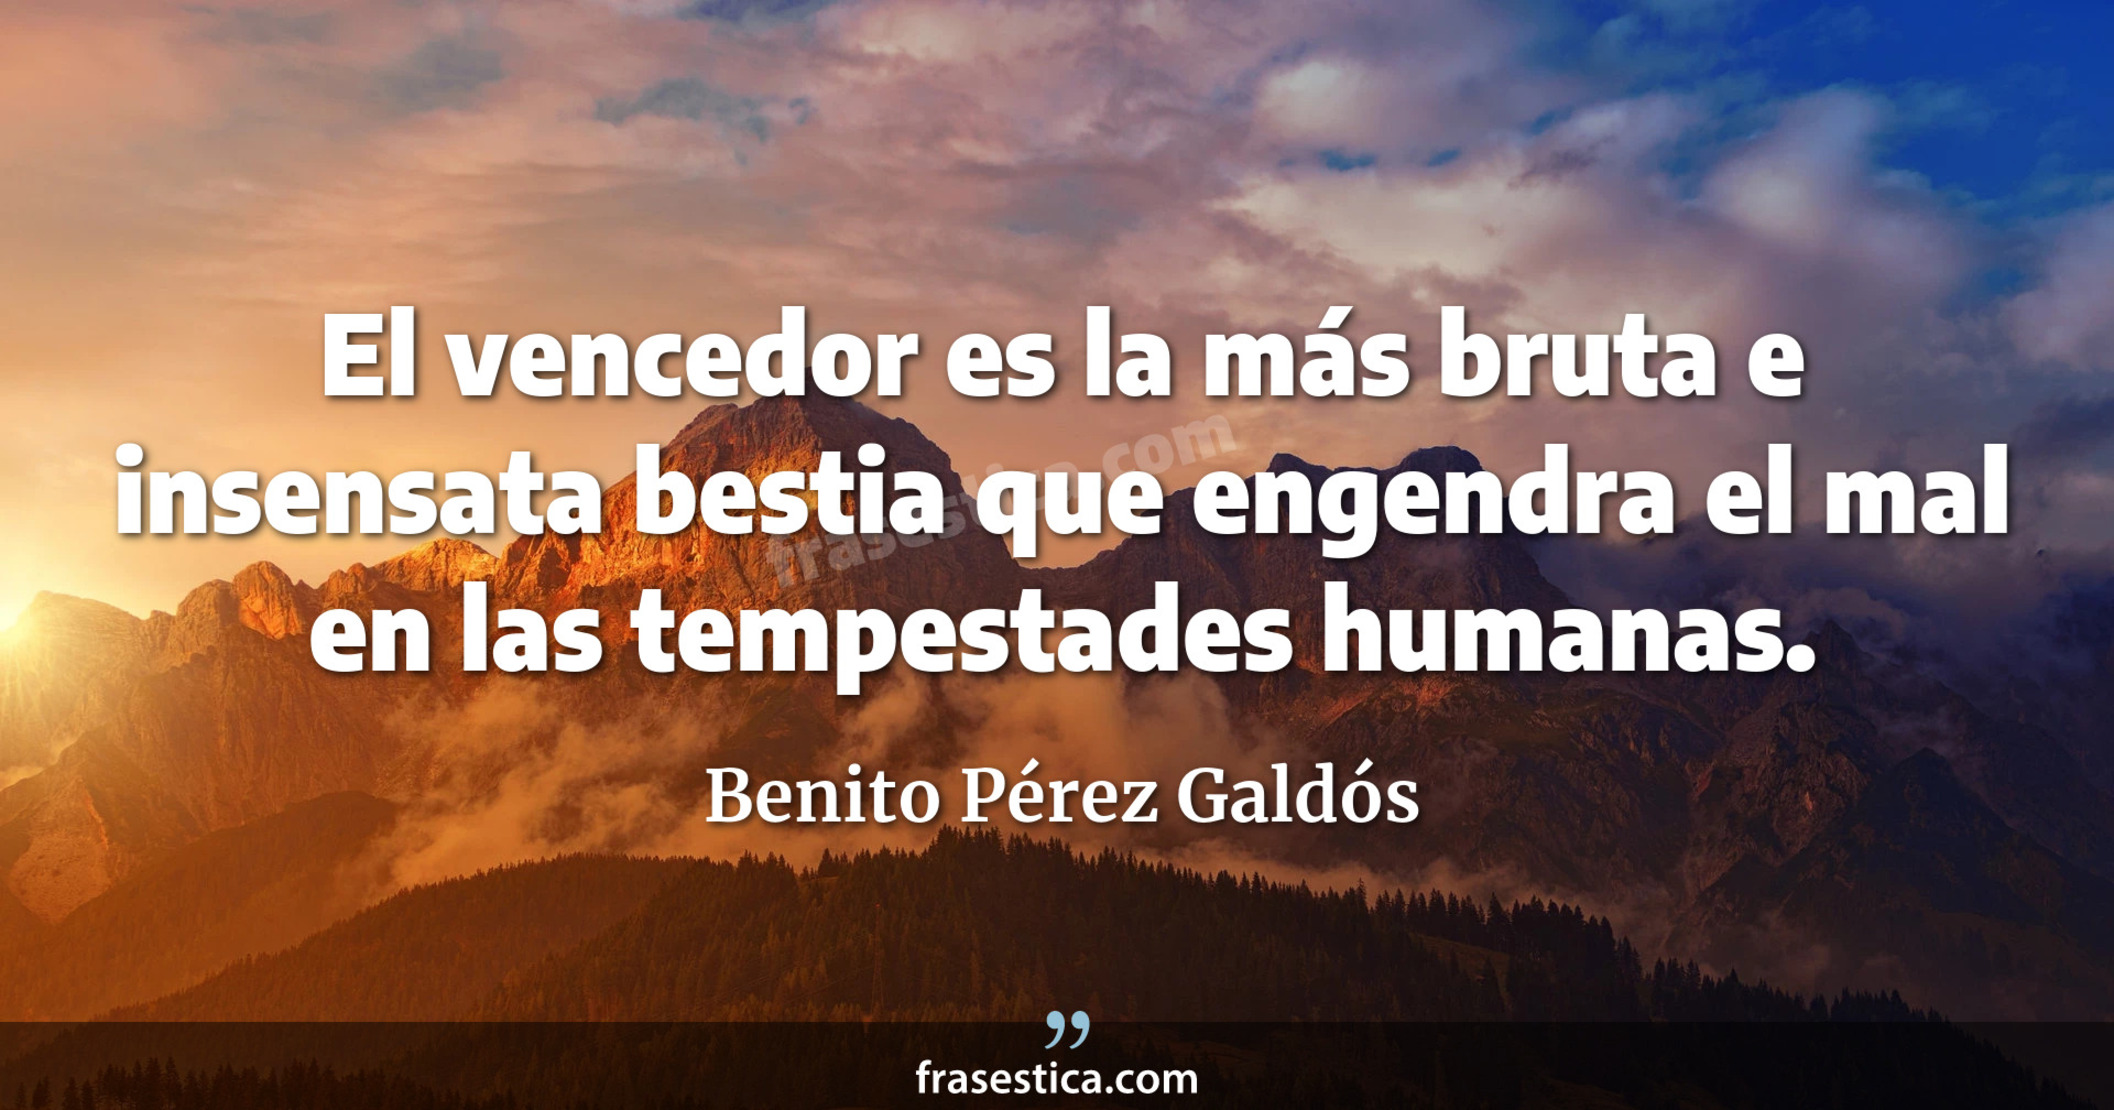 El vencedor es la más bruta e insensata bestia que engendra el mal en las tempestades humanas. - Benito Pérez Galdós